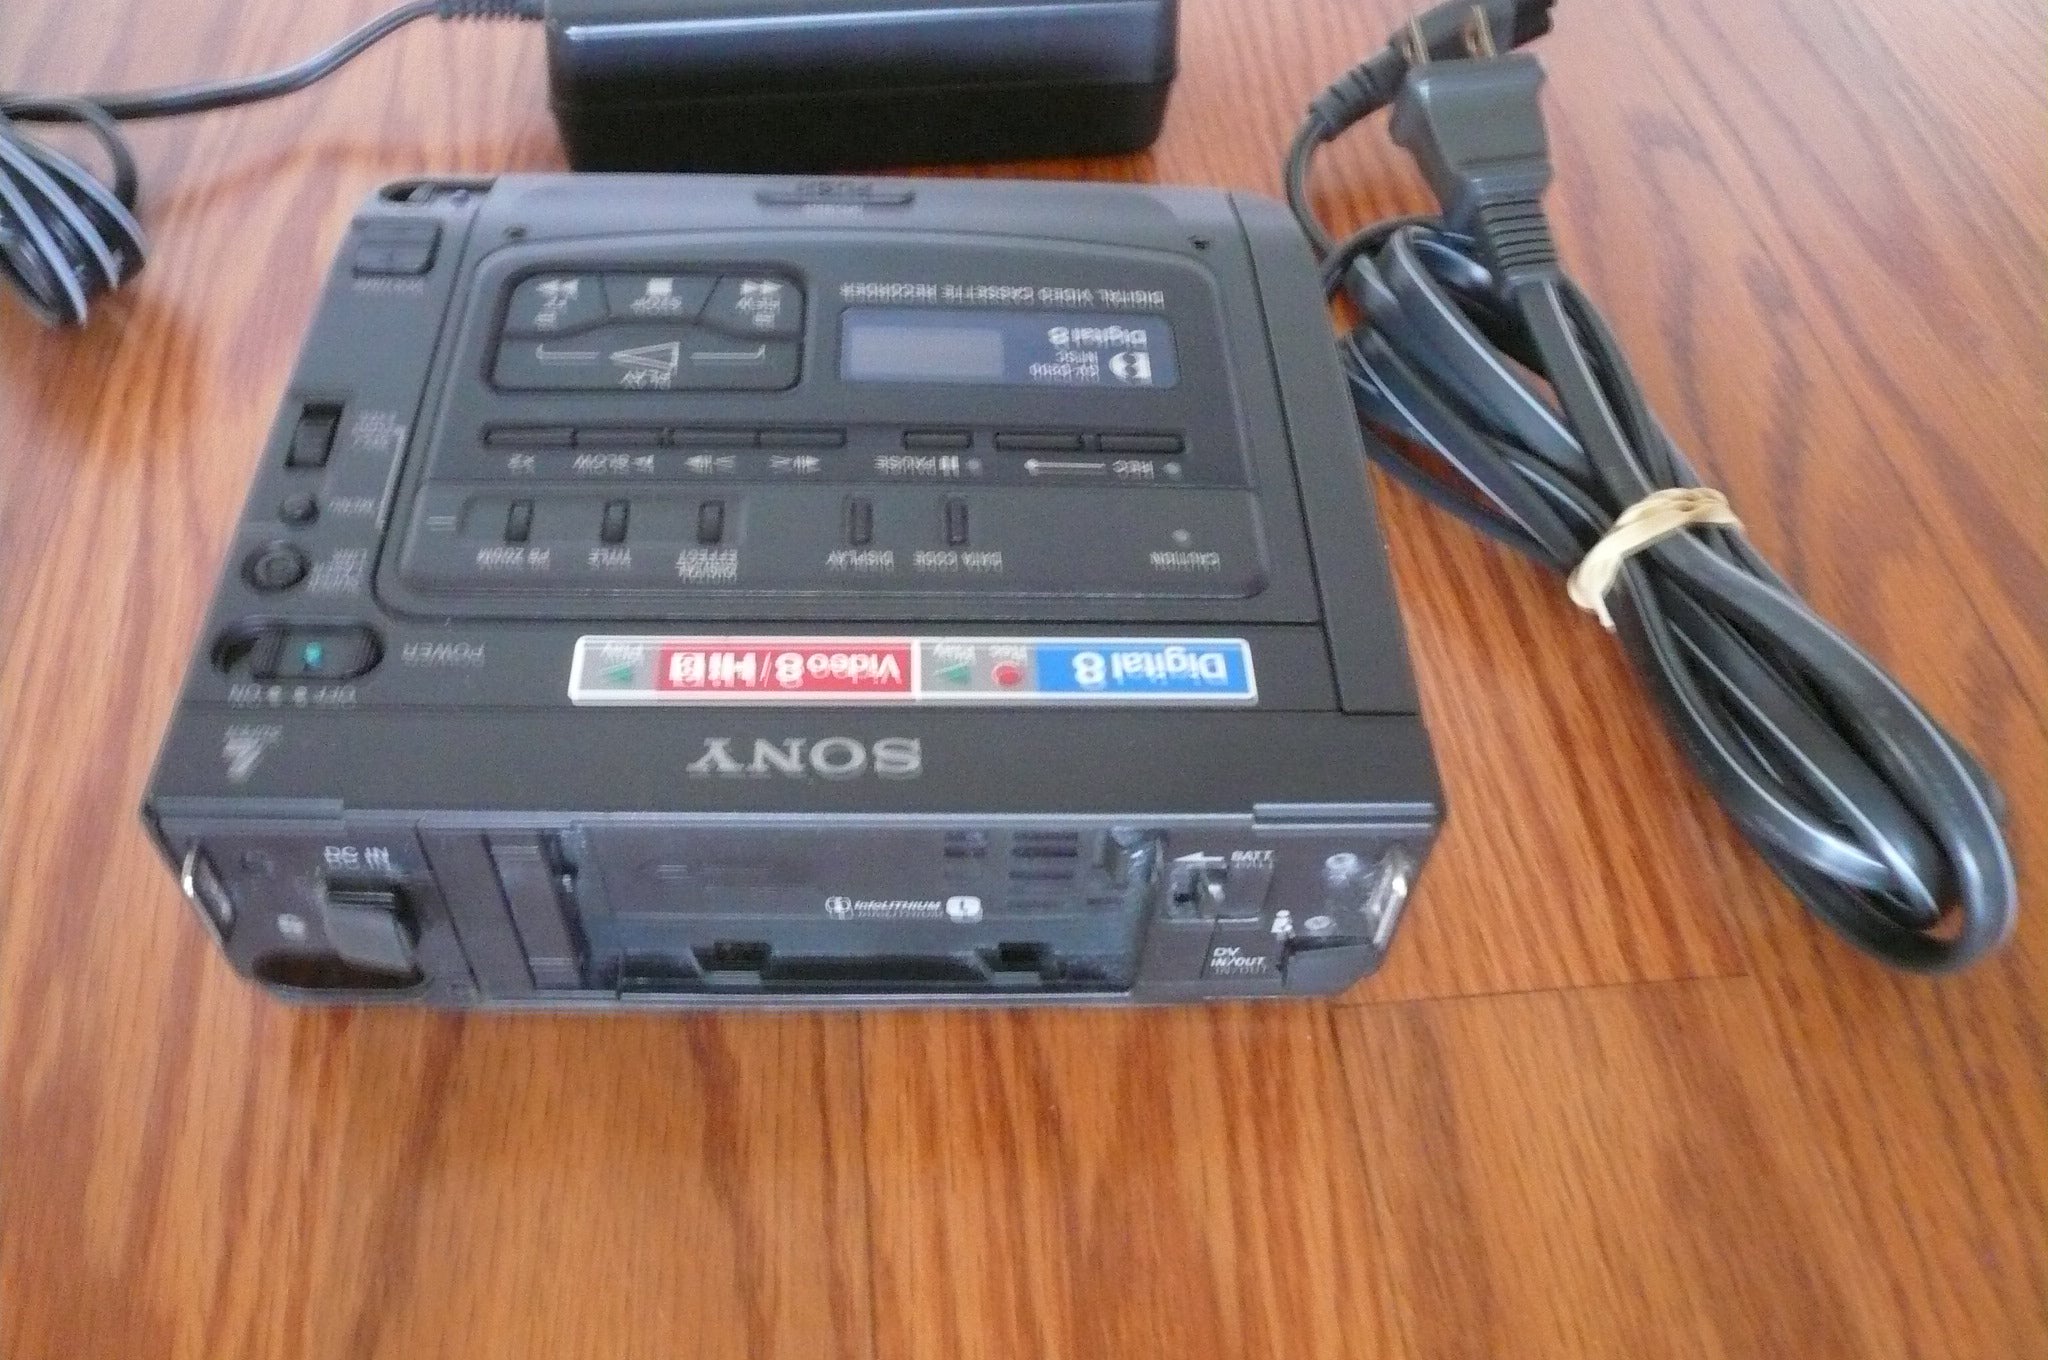 Sony GV D NTSC 8mm video8 Hi8 digital8 video cassette recorder